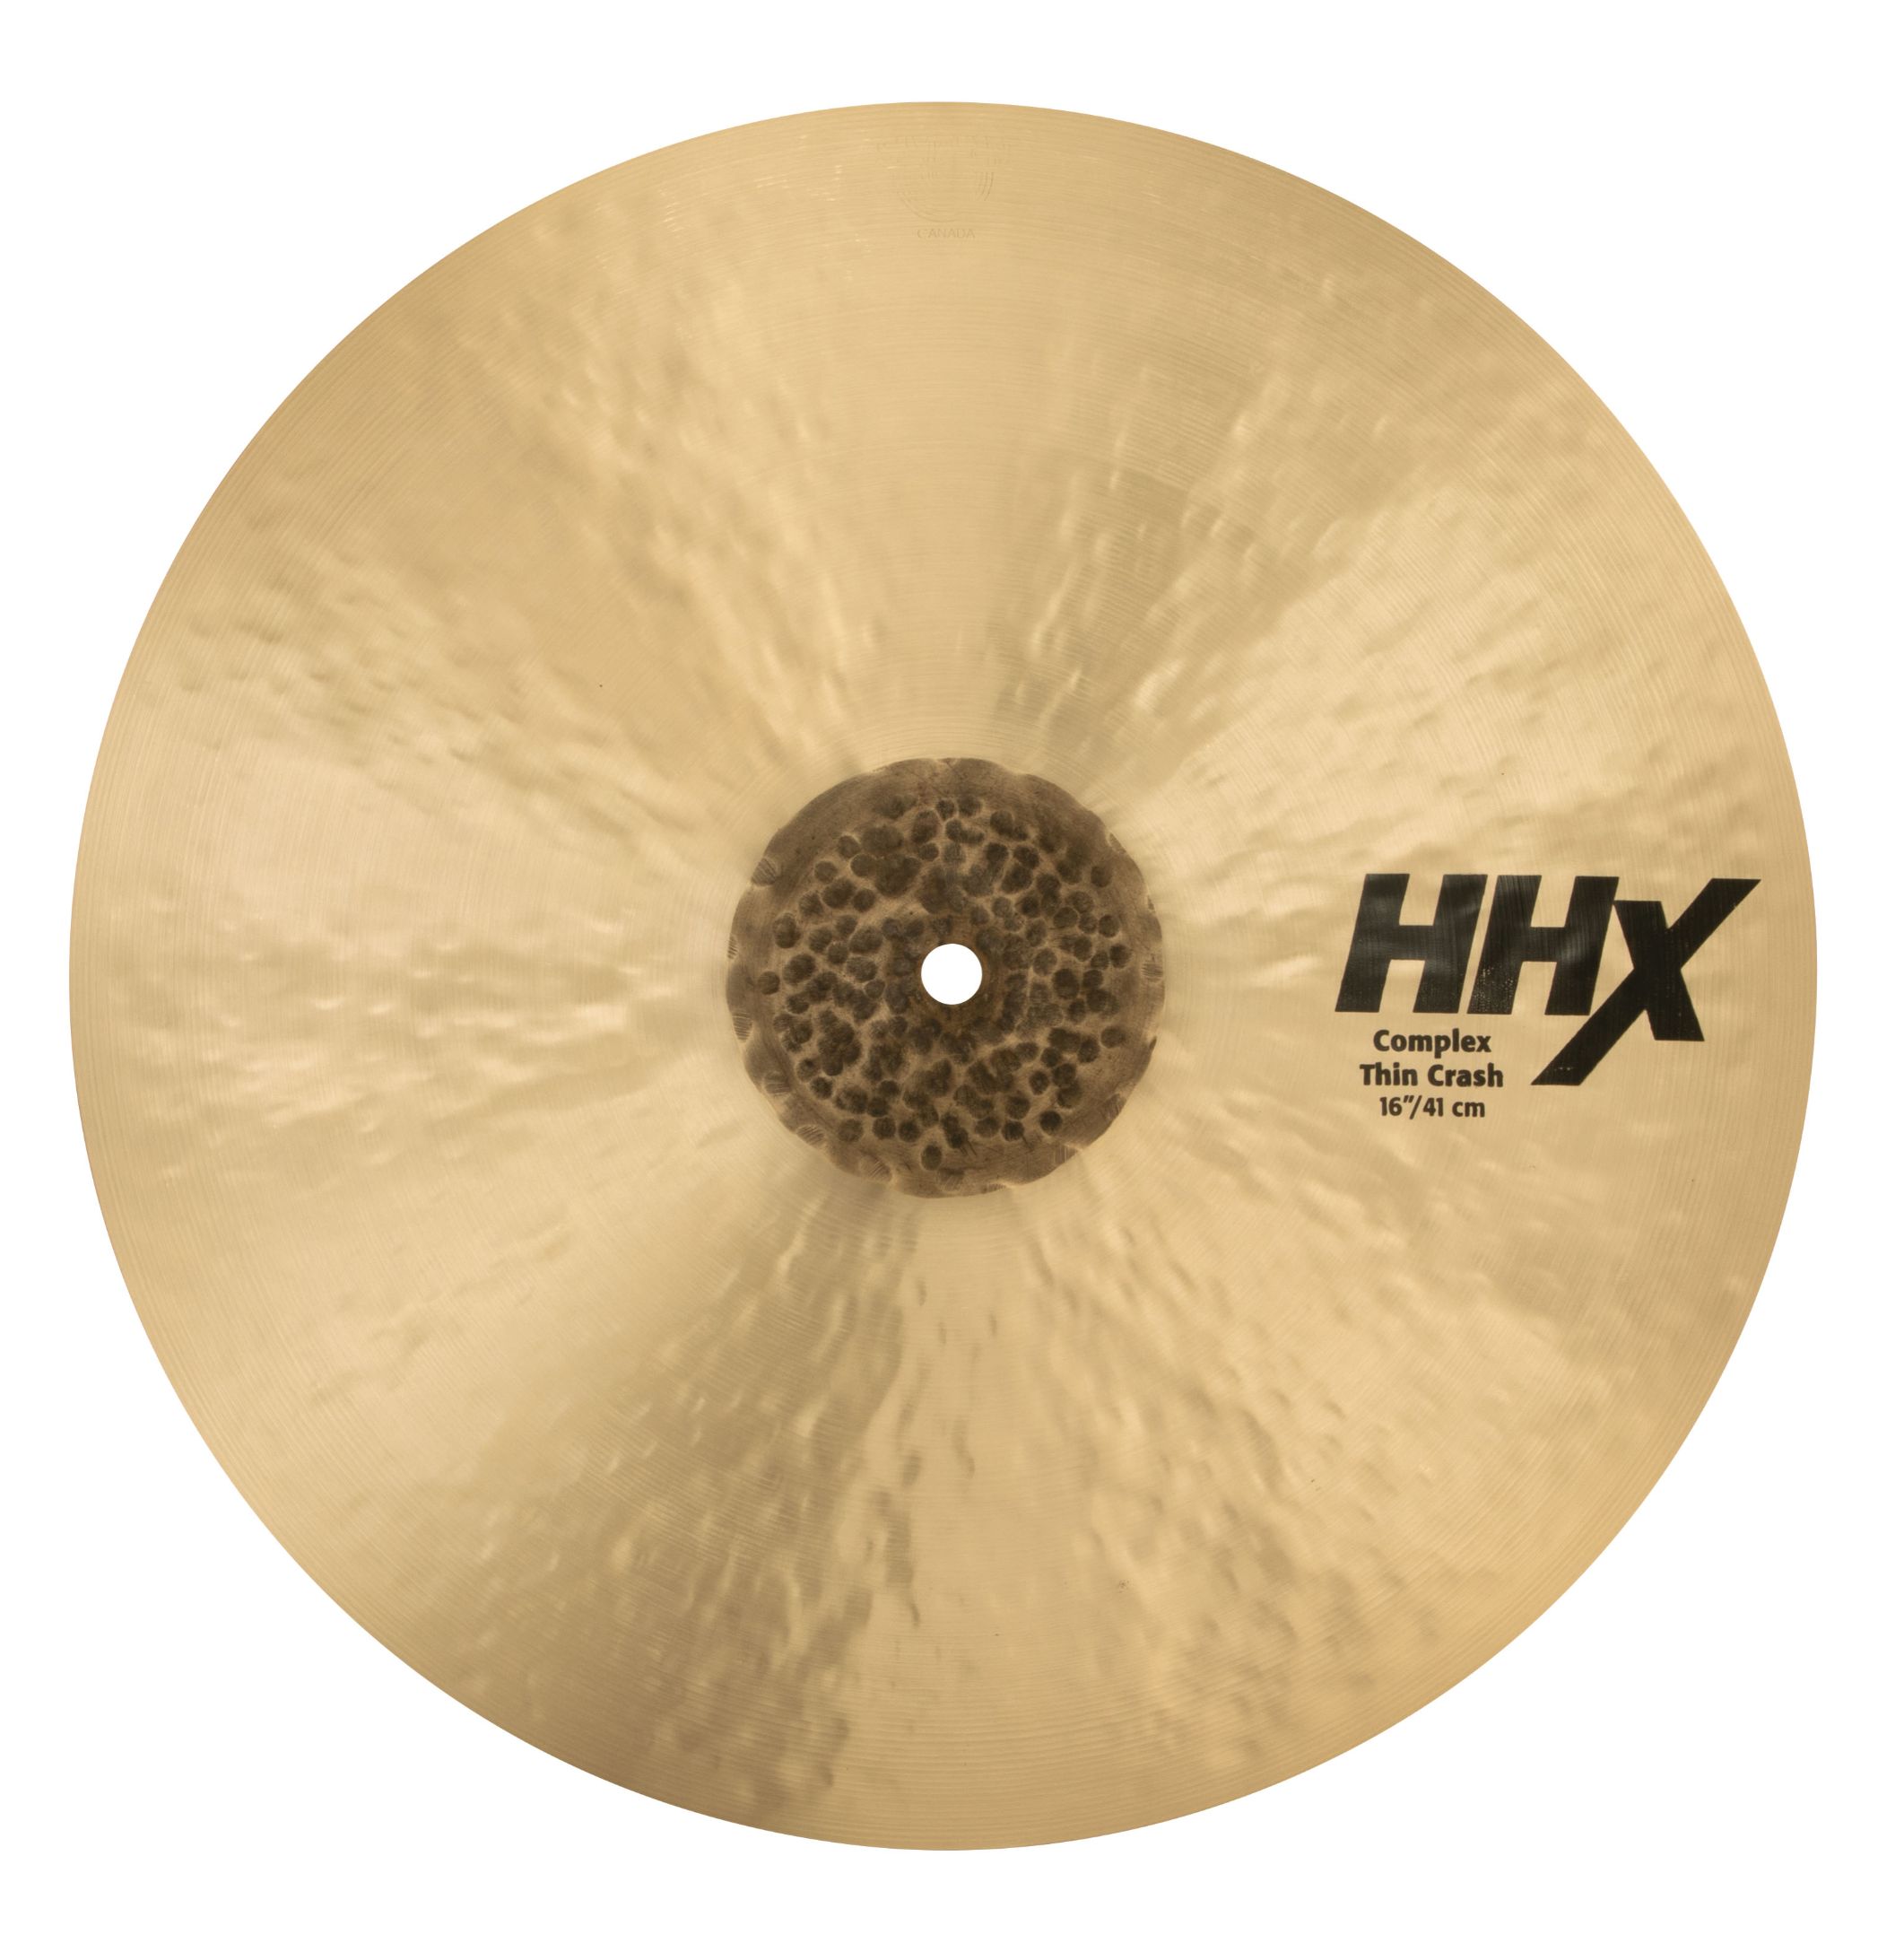 HHX-16CTC 16" Thin Crash追加画像